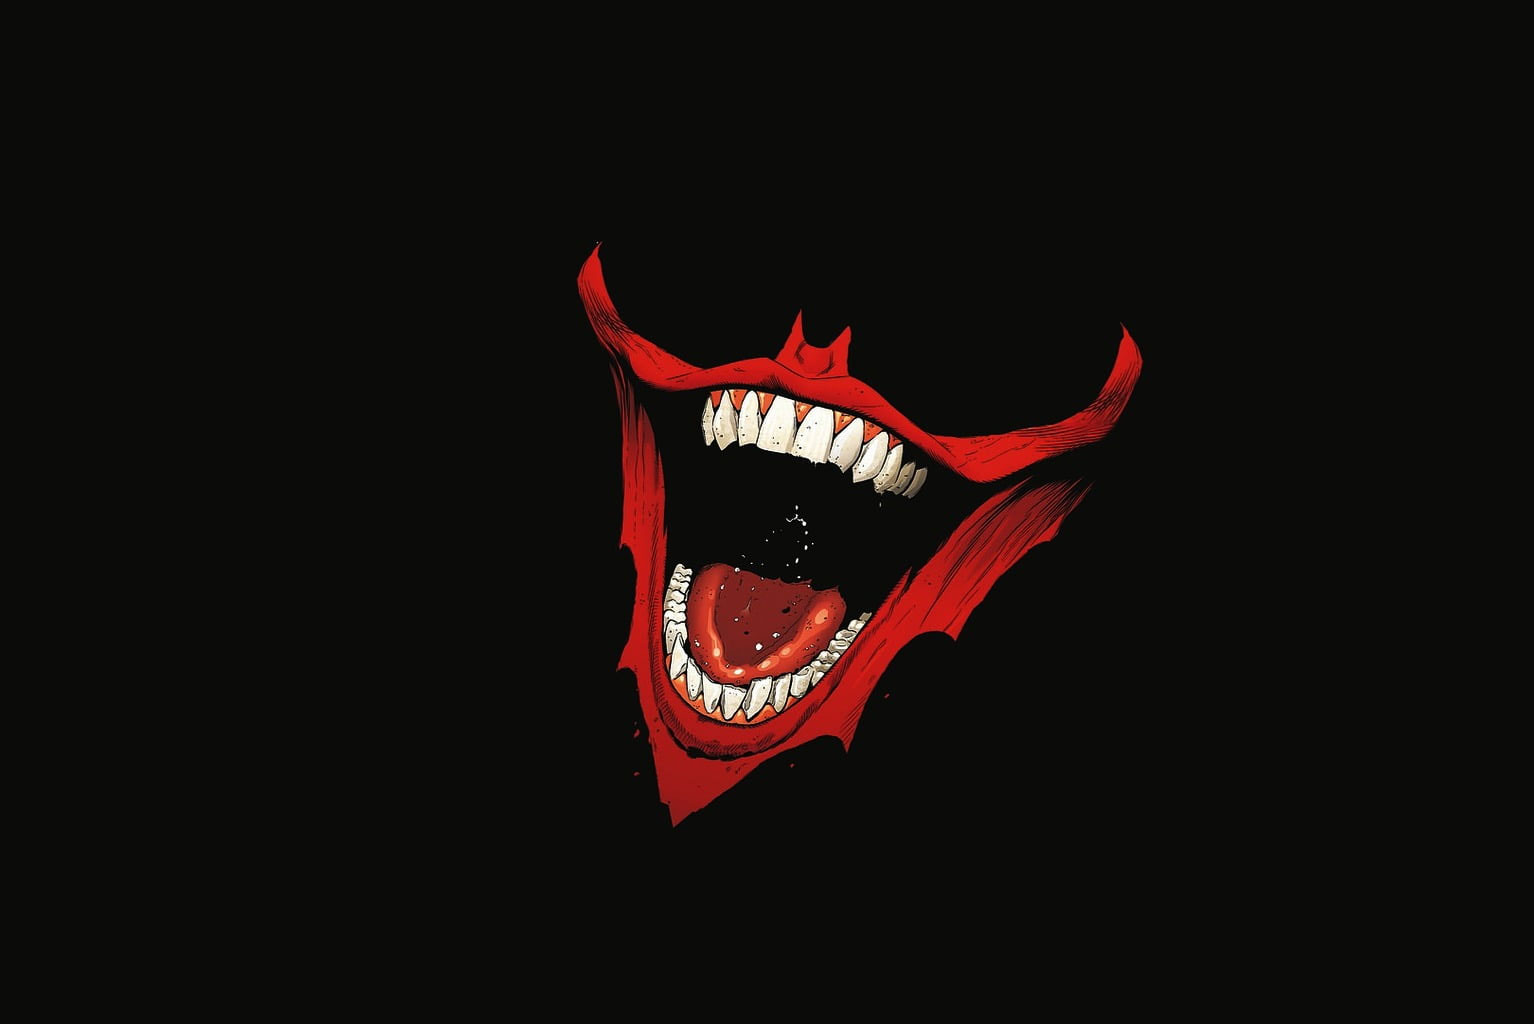 The Joker wallpaper, Batman, DC Comics, teeth, open mouth, studio shot